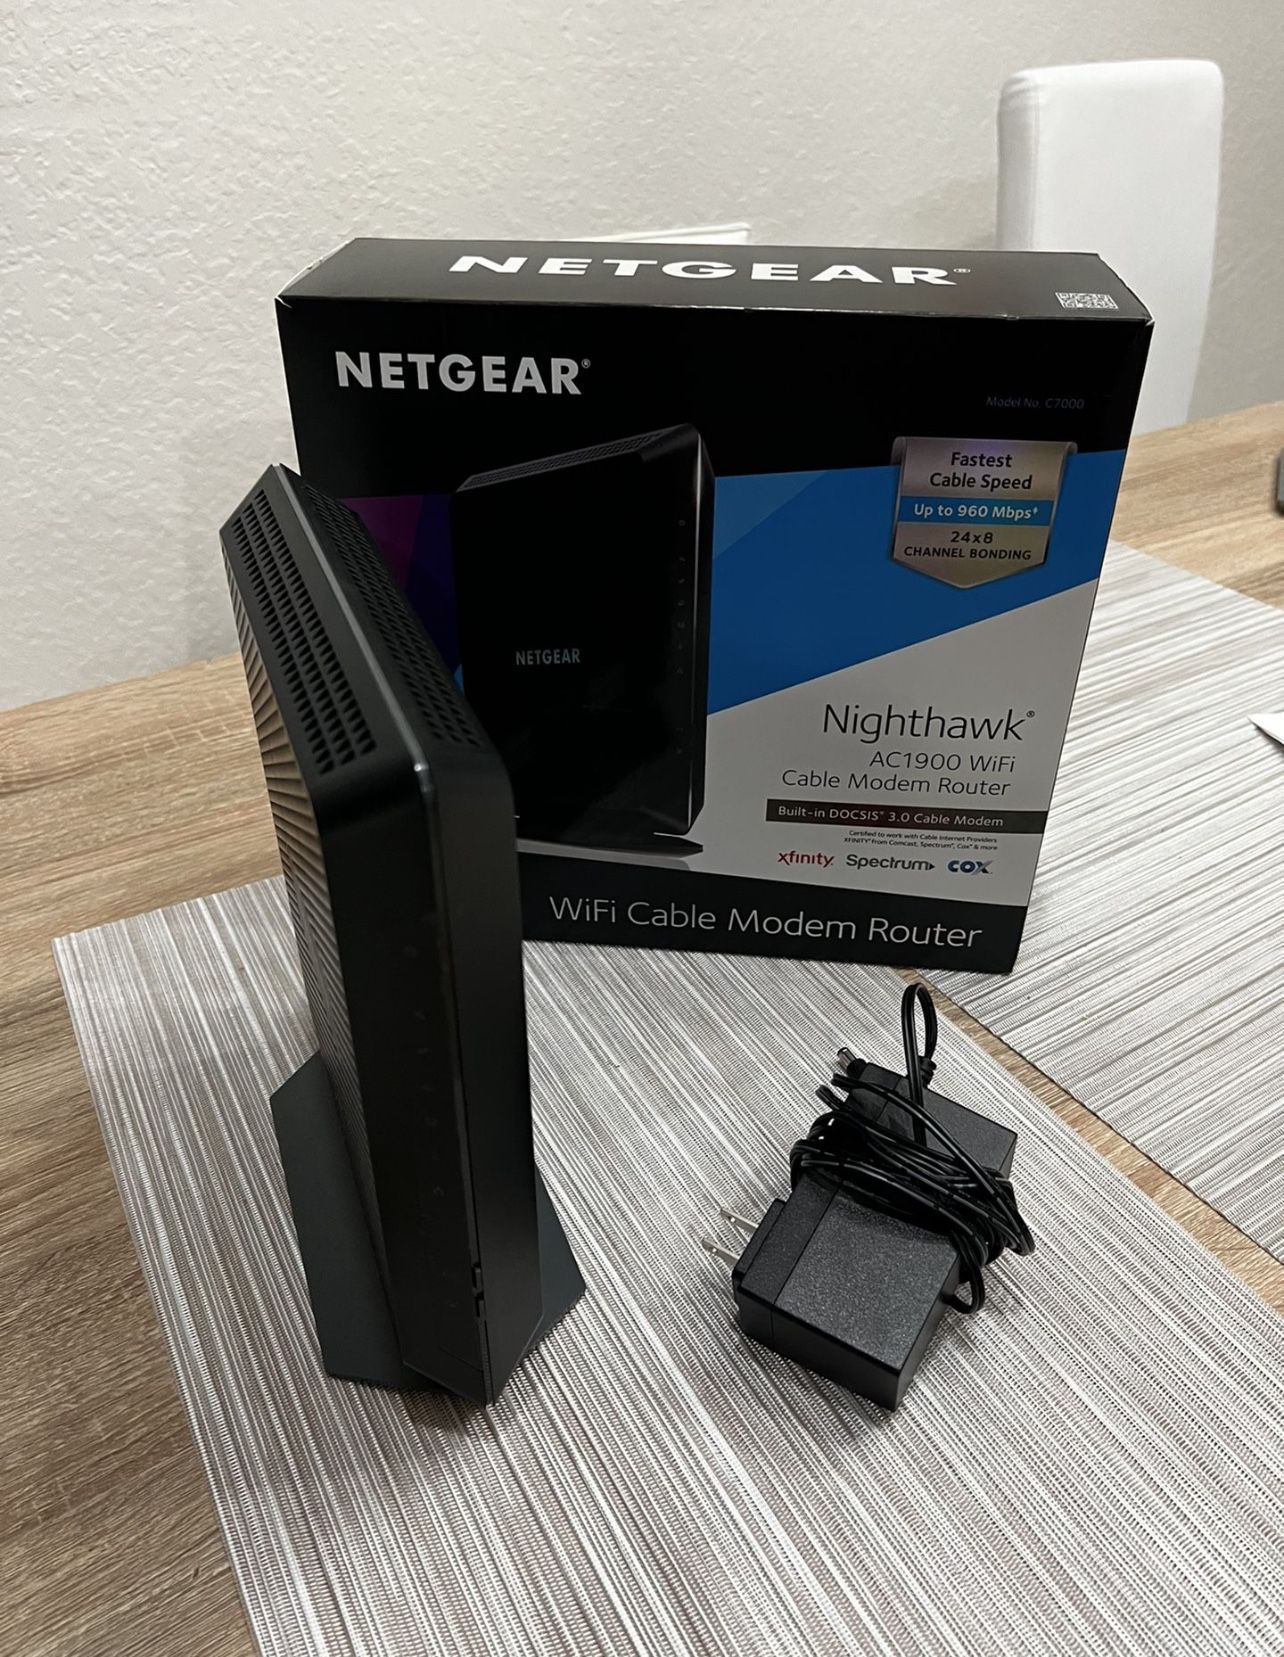 Netgear nighthawk ac 1900 cable modem router